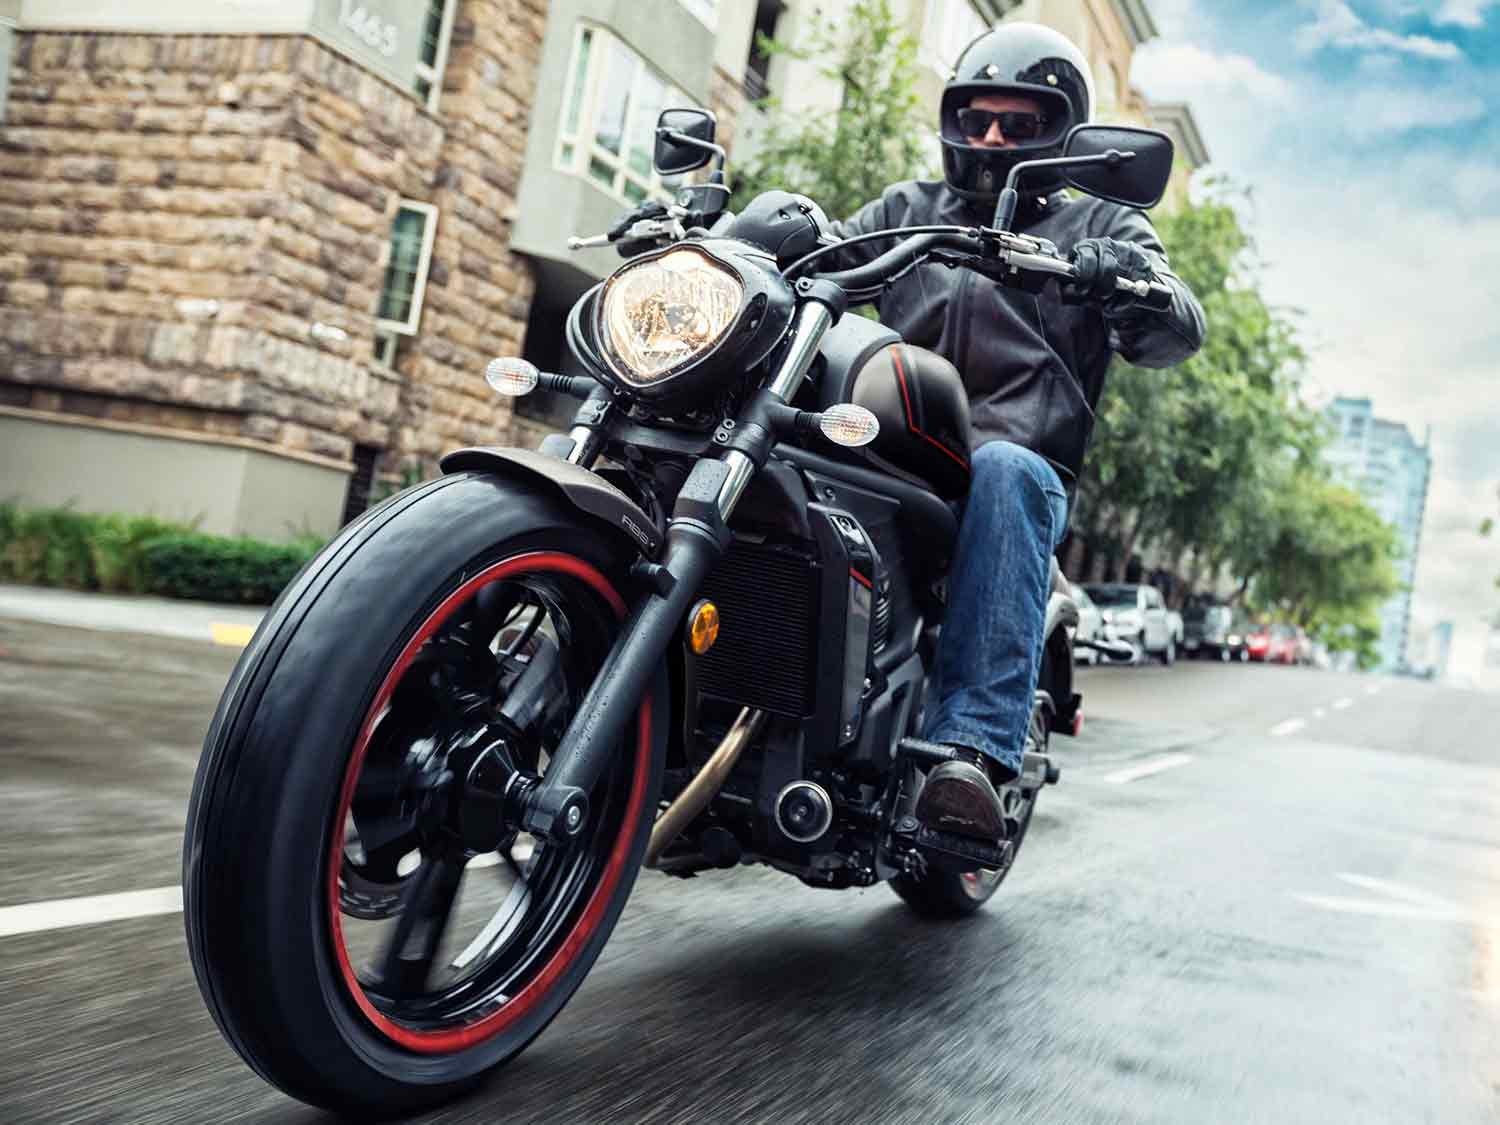 2021 Kawasaki S First Look | Motorcyclist